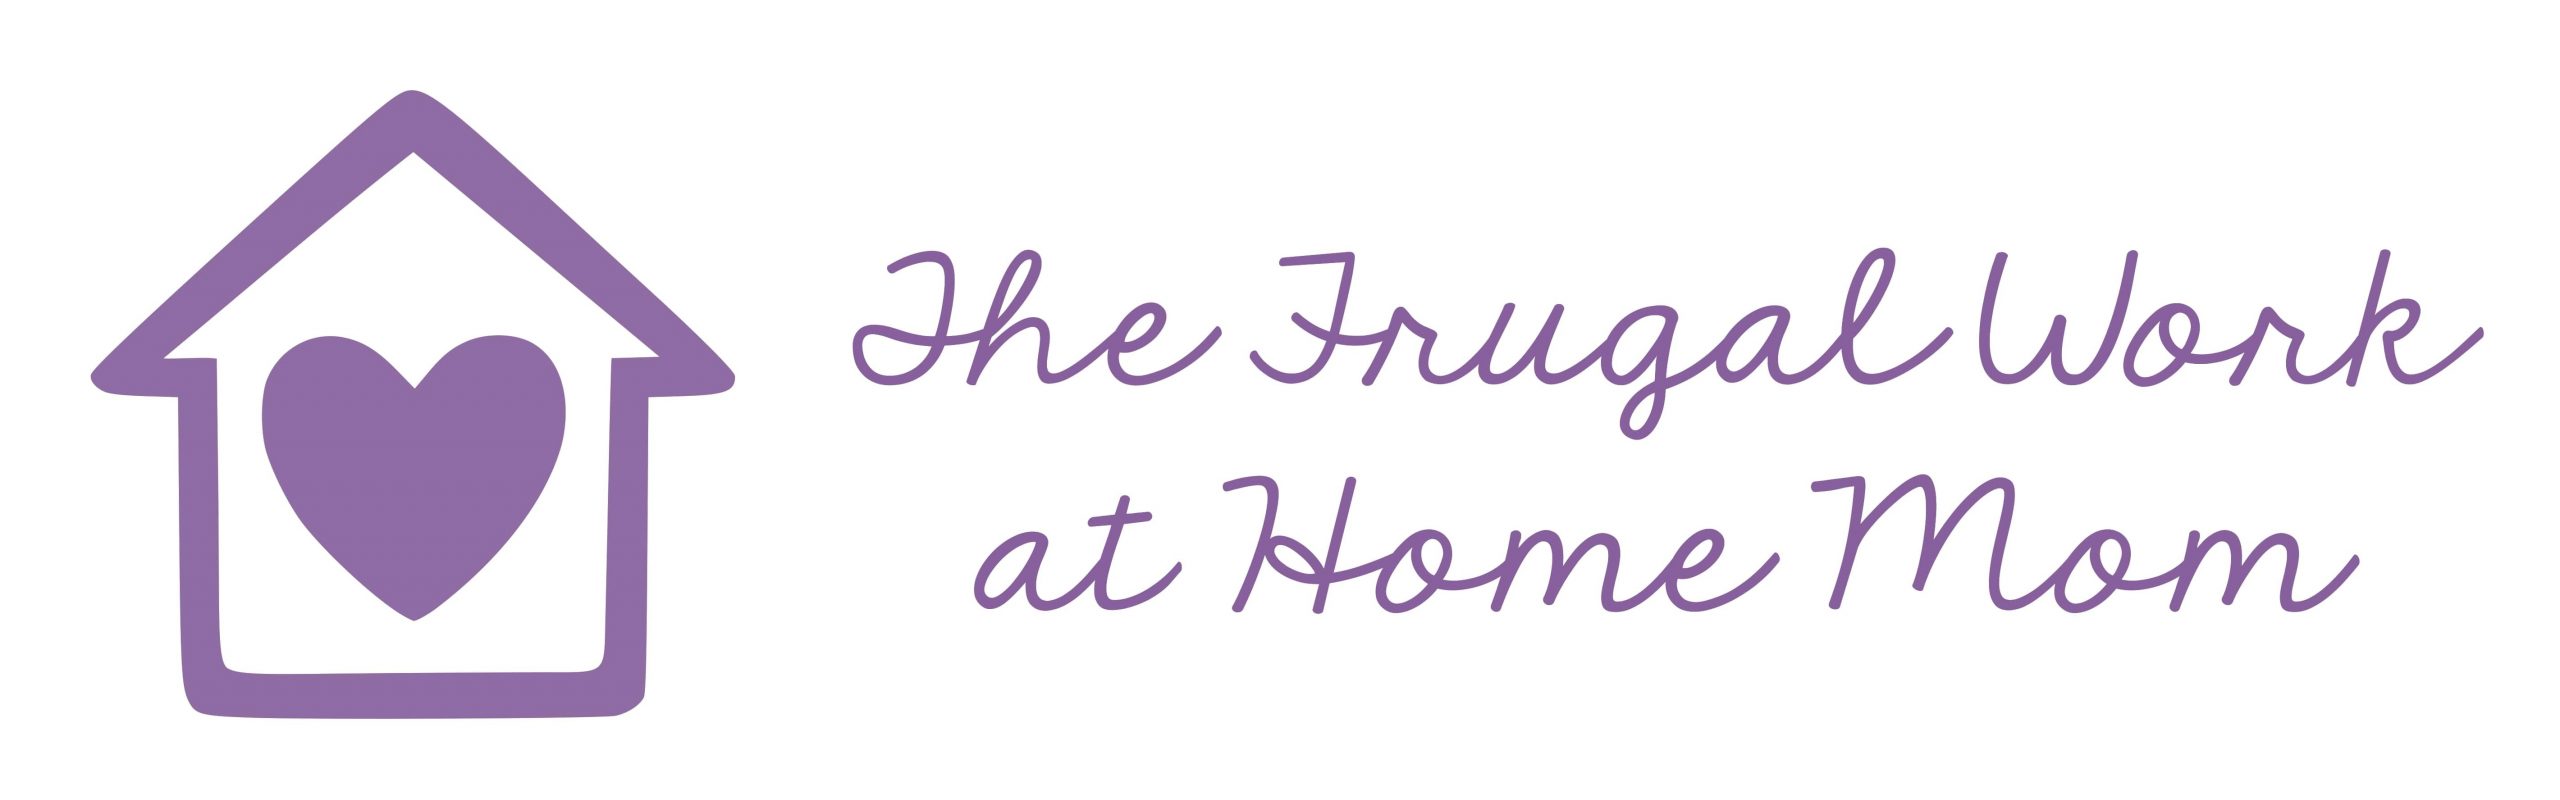 Frugal Work at Home Mom logo